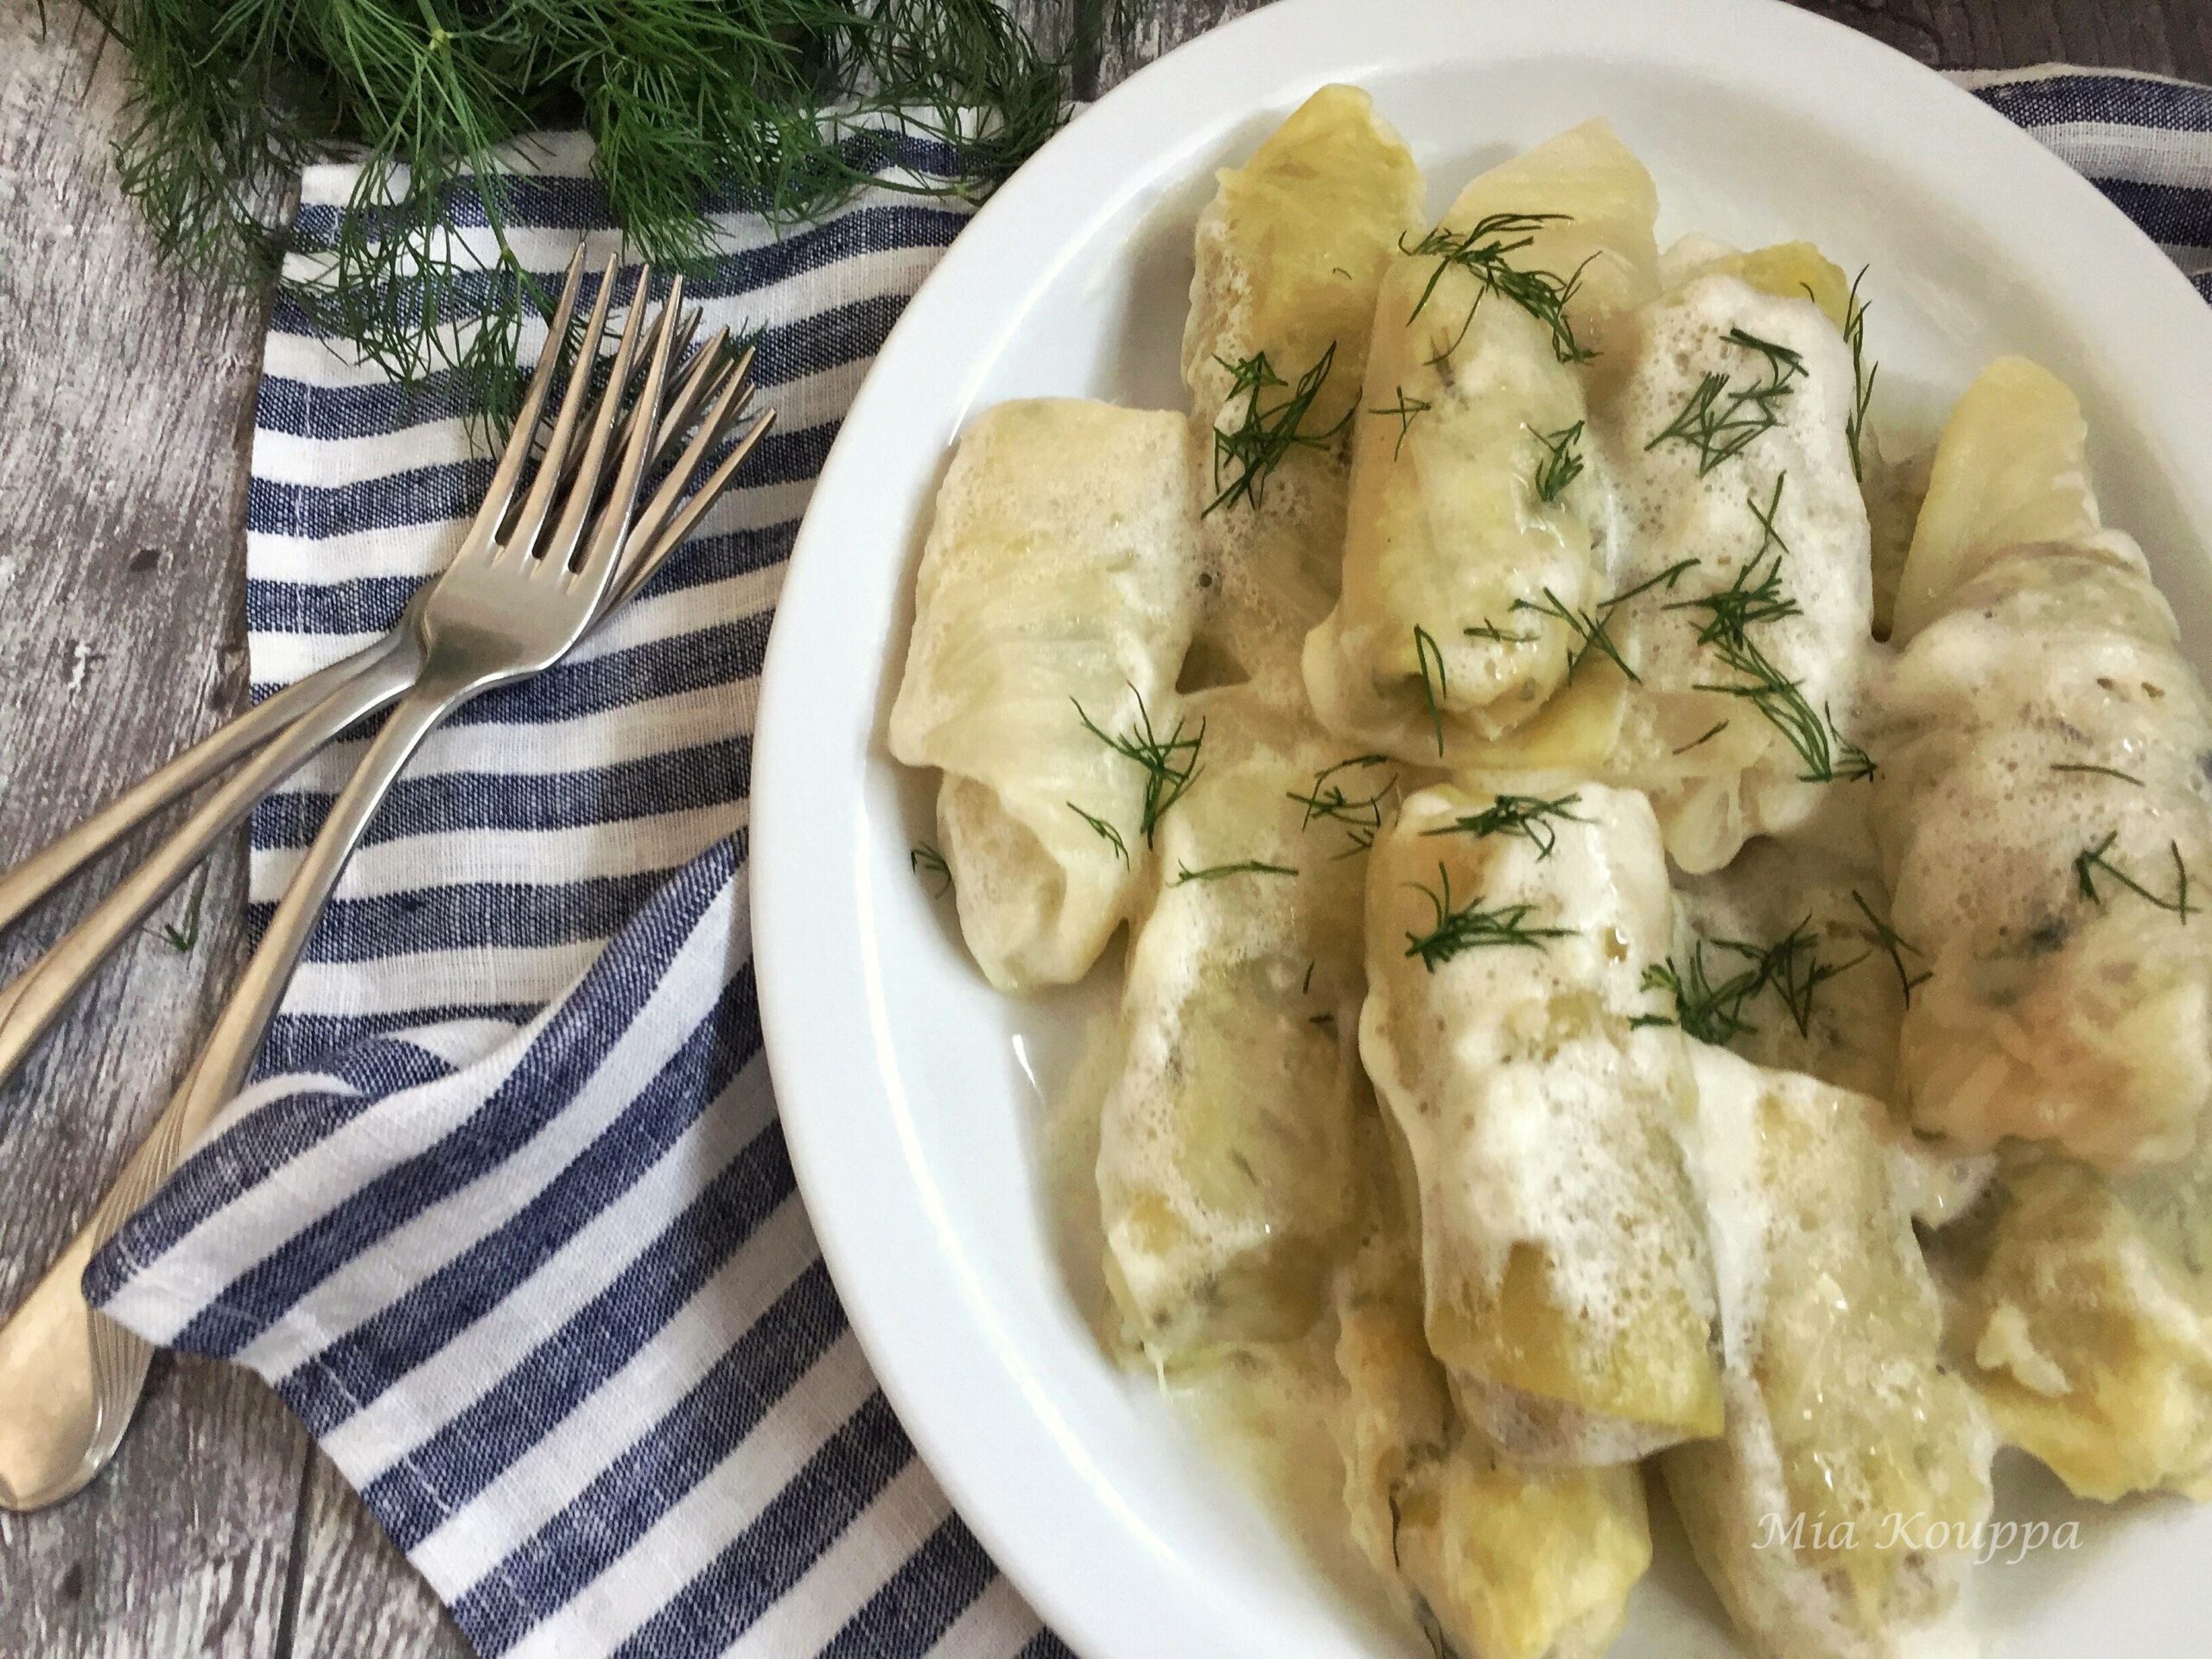 Cabbage rolls with egg-lemon sauce (Λαχανοντολμάδες με αυγολέμονο)